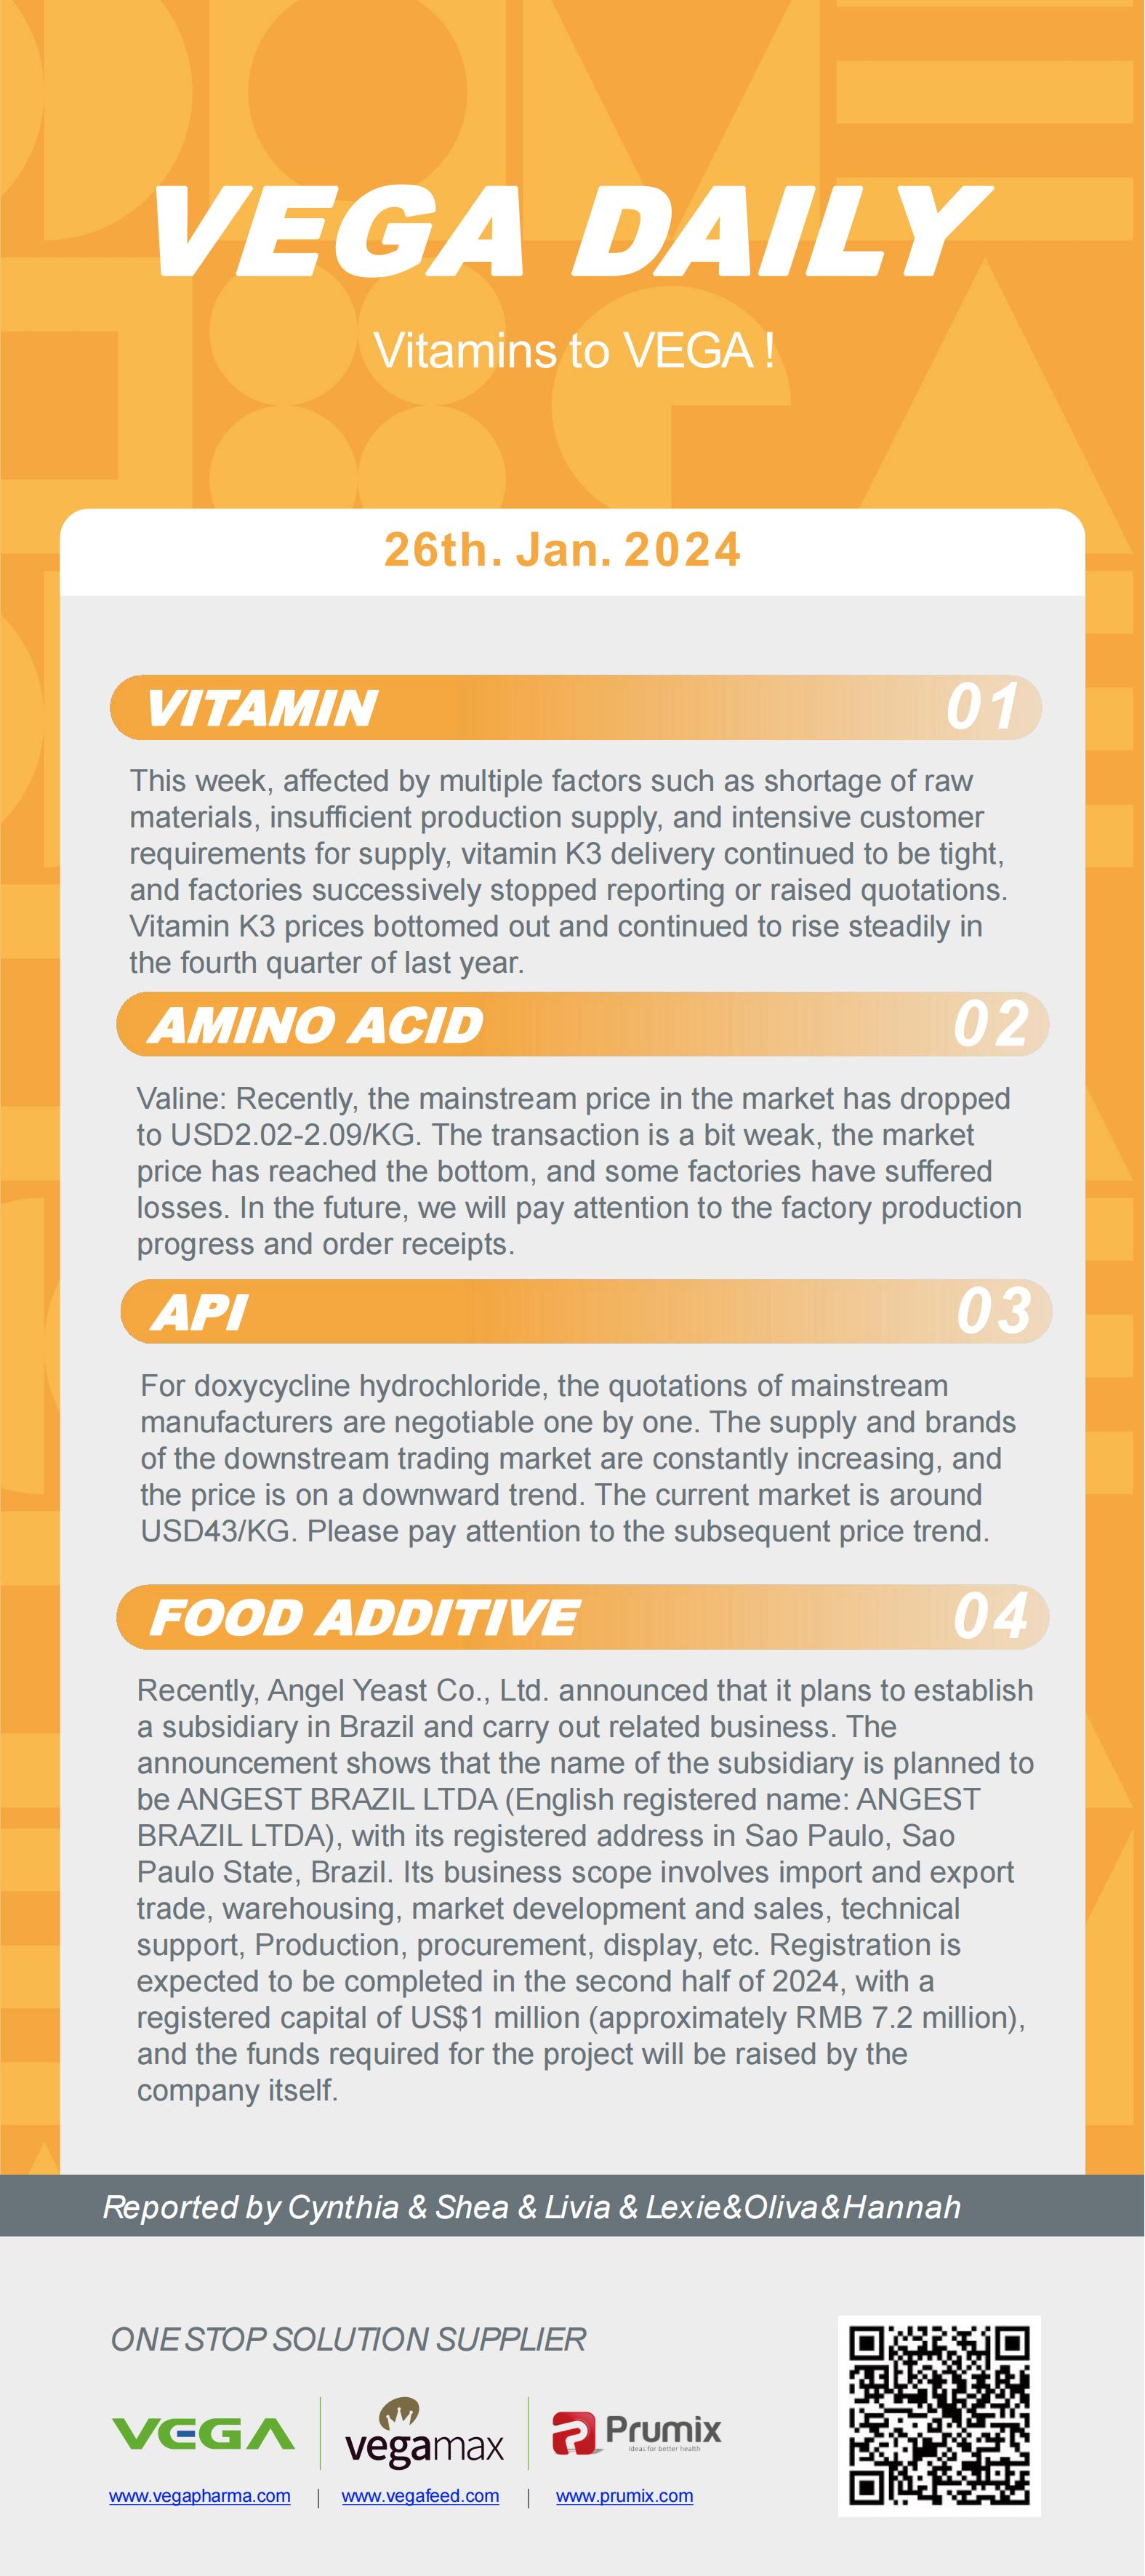 Vega Daily Dated on Jan 26th 2024 Vitamin Amino Acid APl Food Additives.jpg